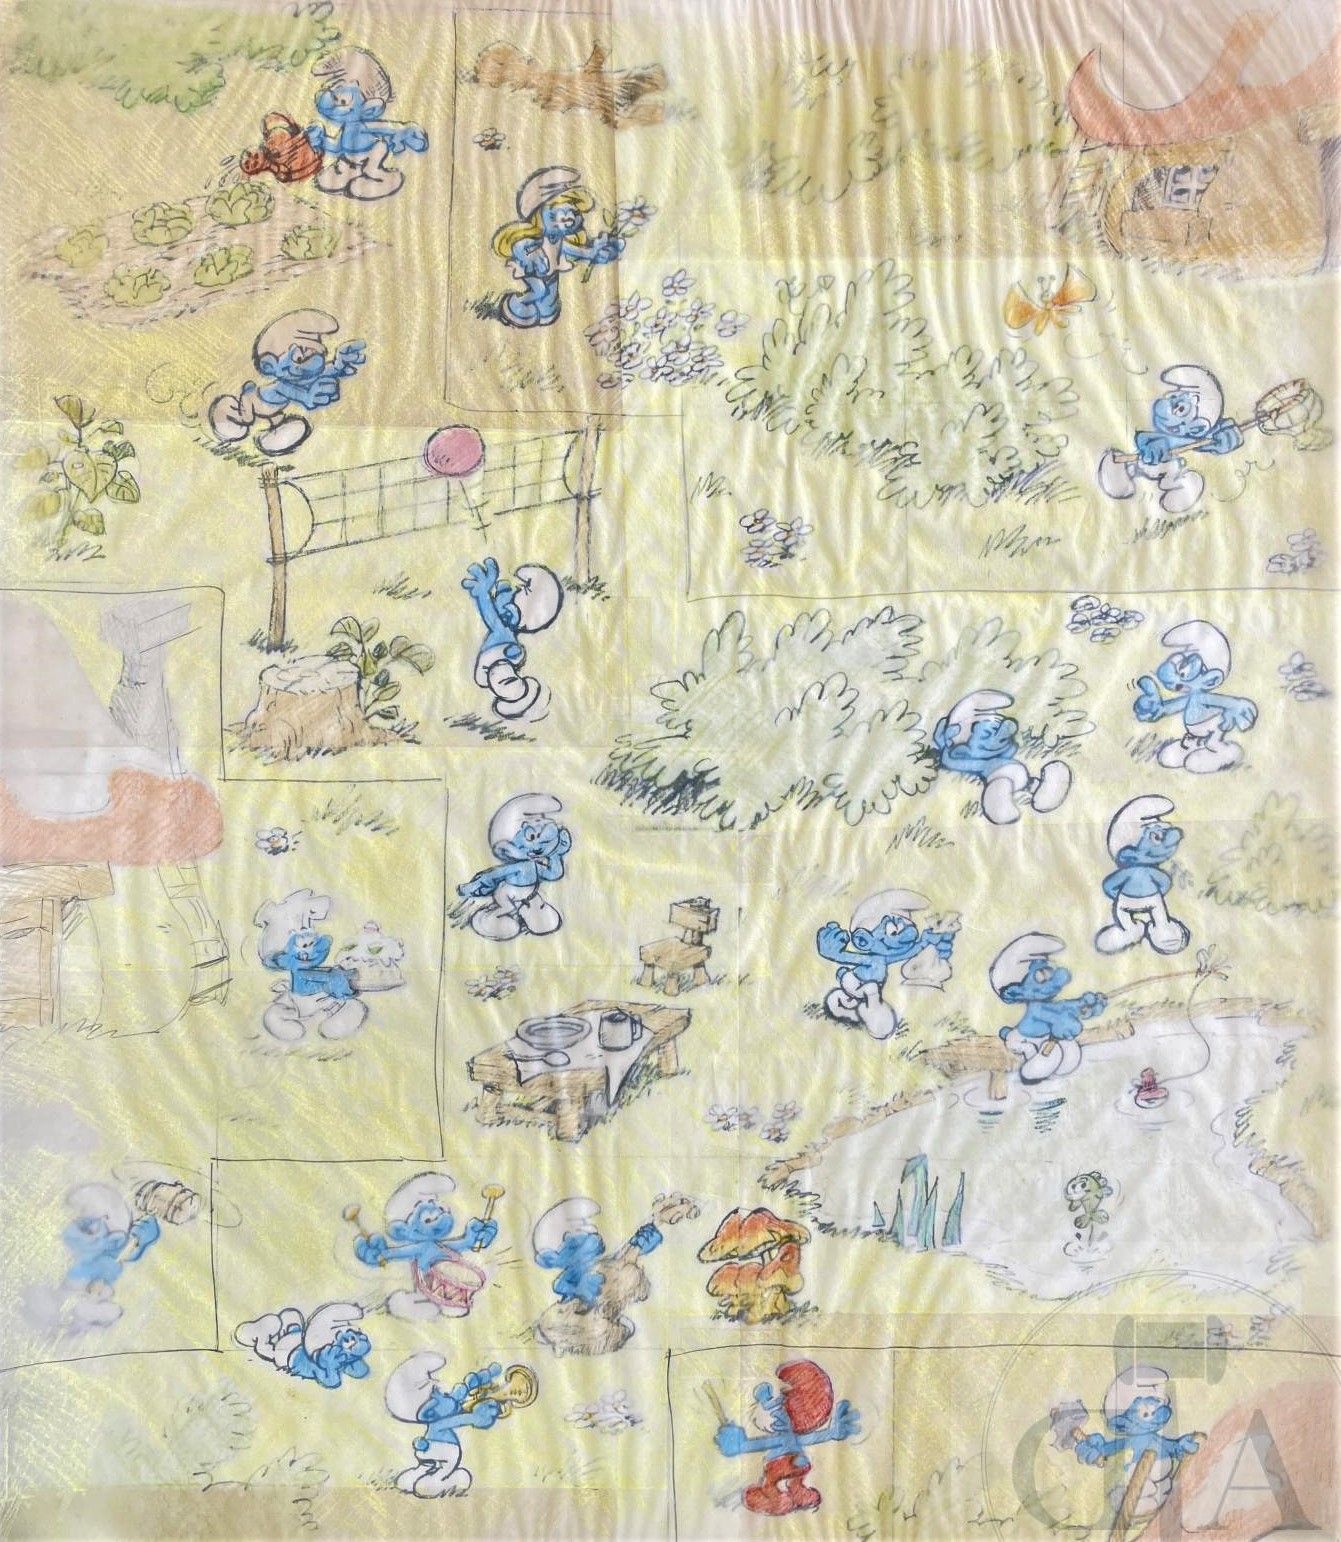 Null Peyo工作室/绘声绘色地展示了蓝精灵村的所有人物。 描图纸上的彩色铅笔。 为一张海报 "Petit Gervais "所做的工作，目的是贴上所提供的&hellip;